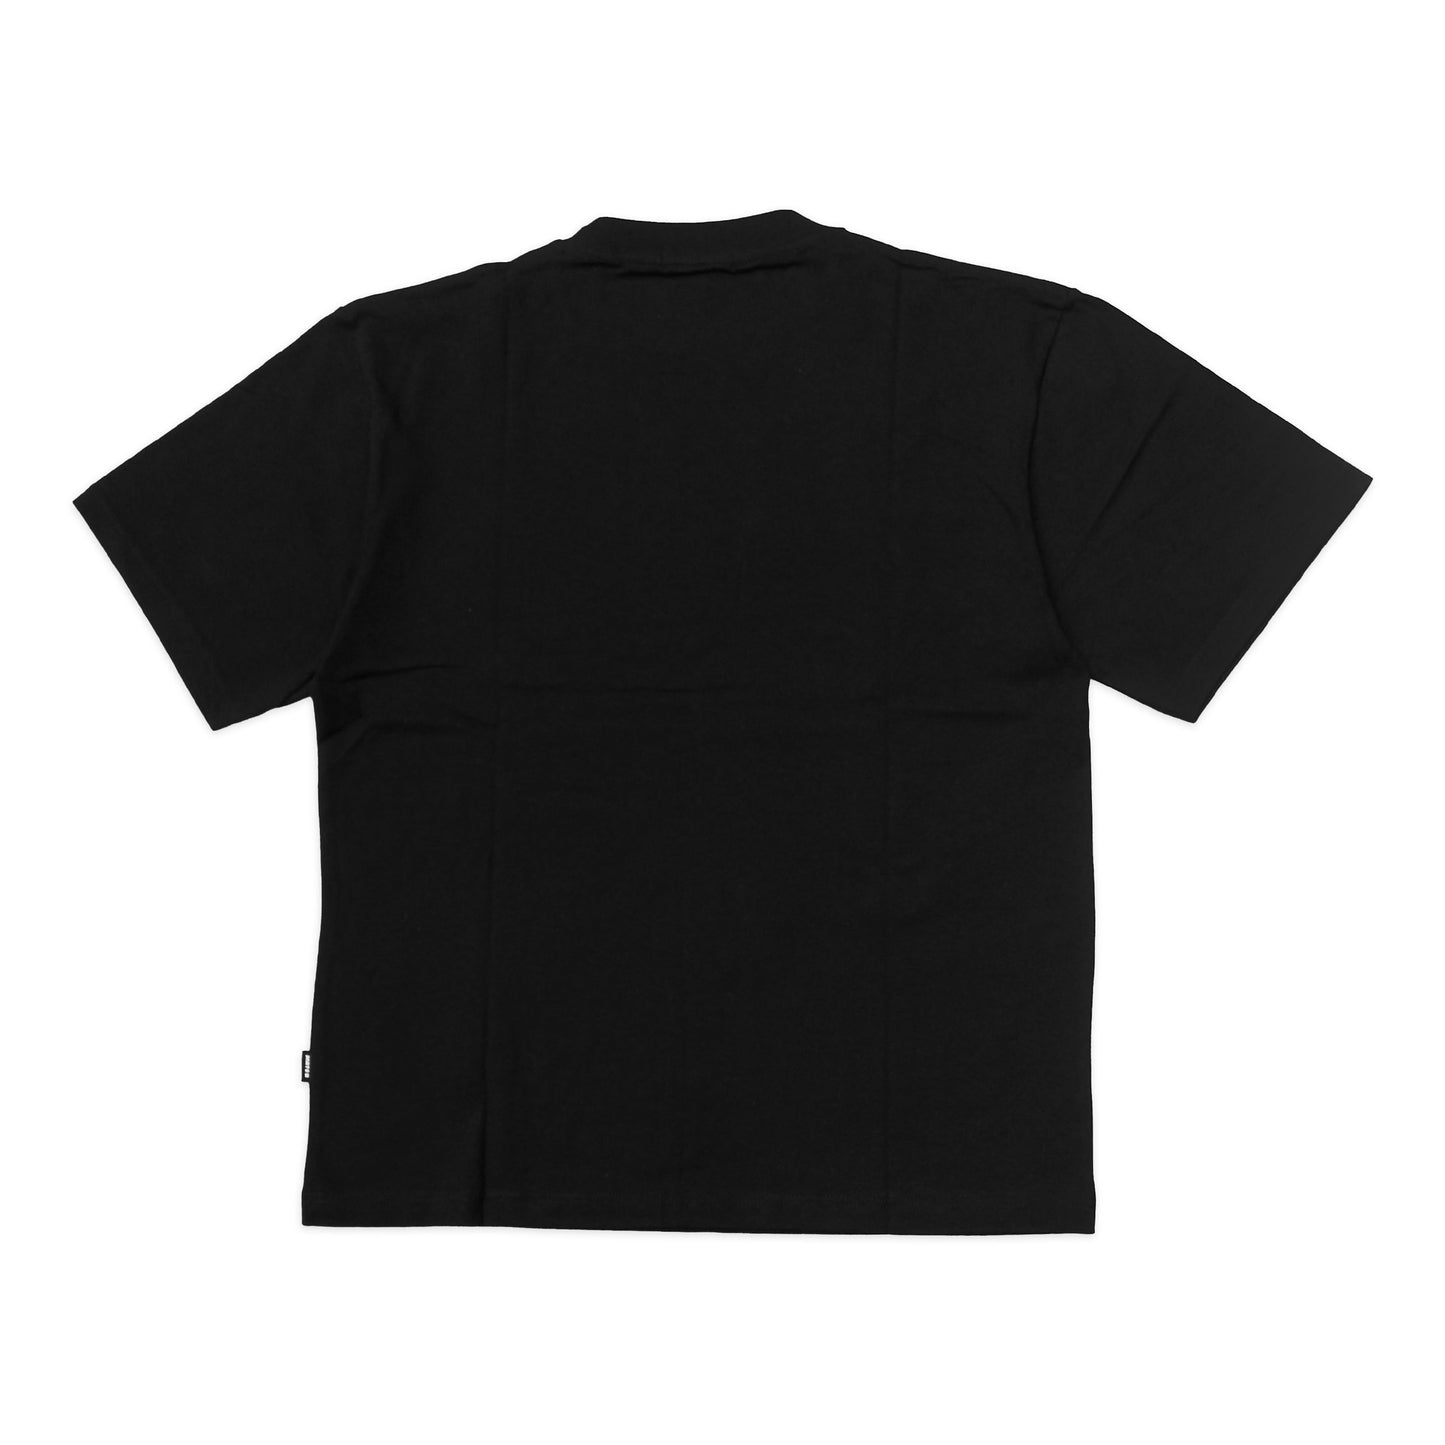 Miracle Mates - Grain Black Oversized T Shirt